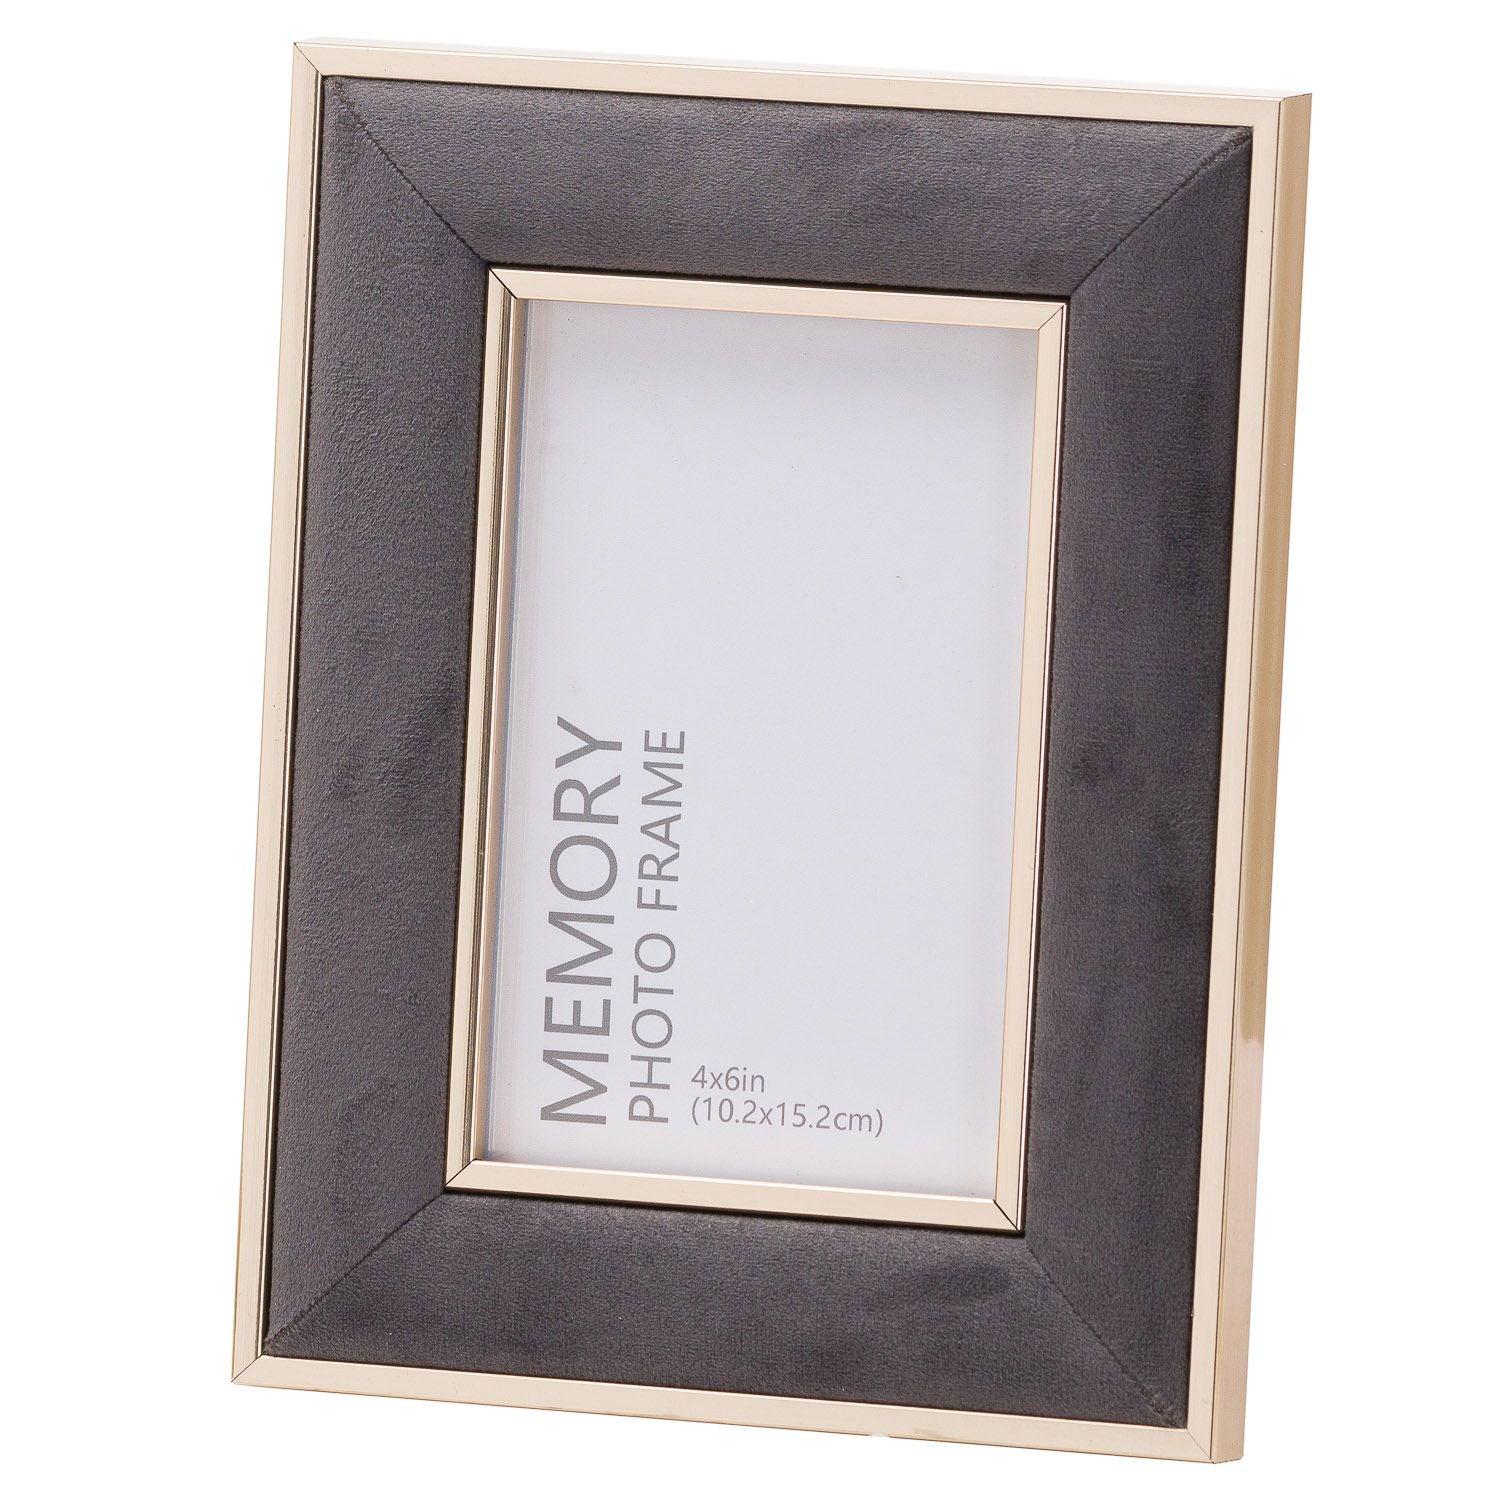 Gold and Grey velvet photo frame size 4x6